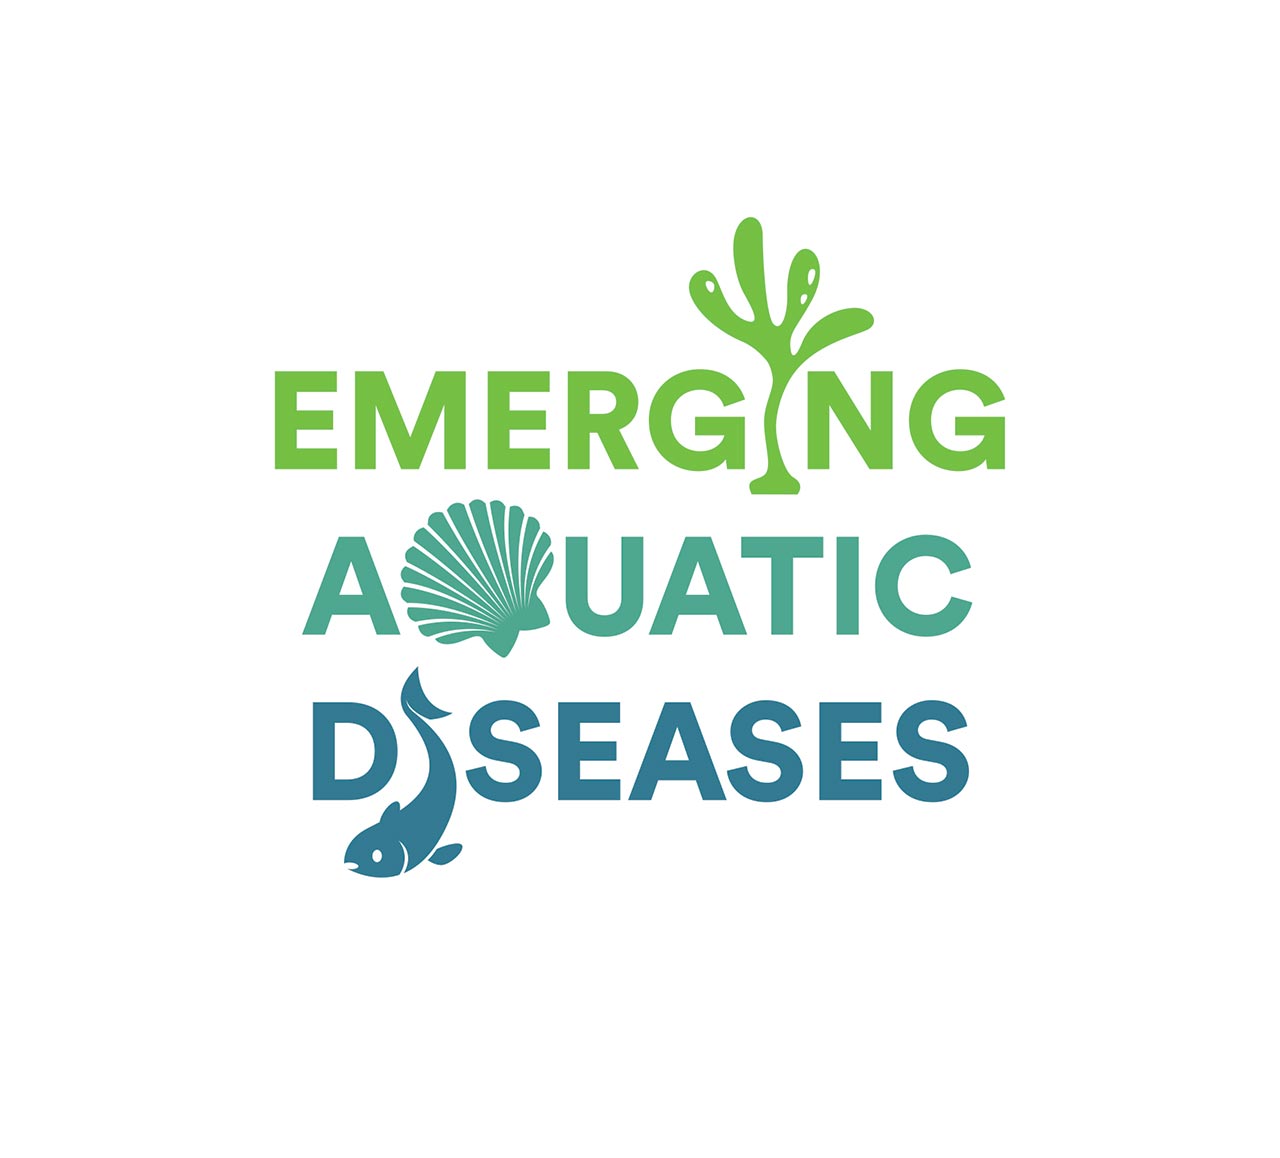 Emerging Aquatic Diseases